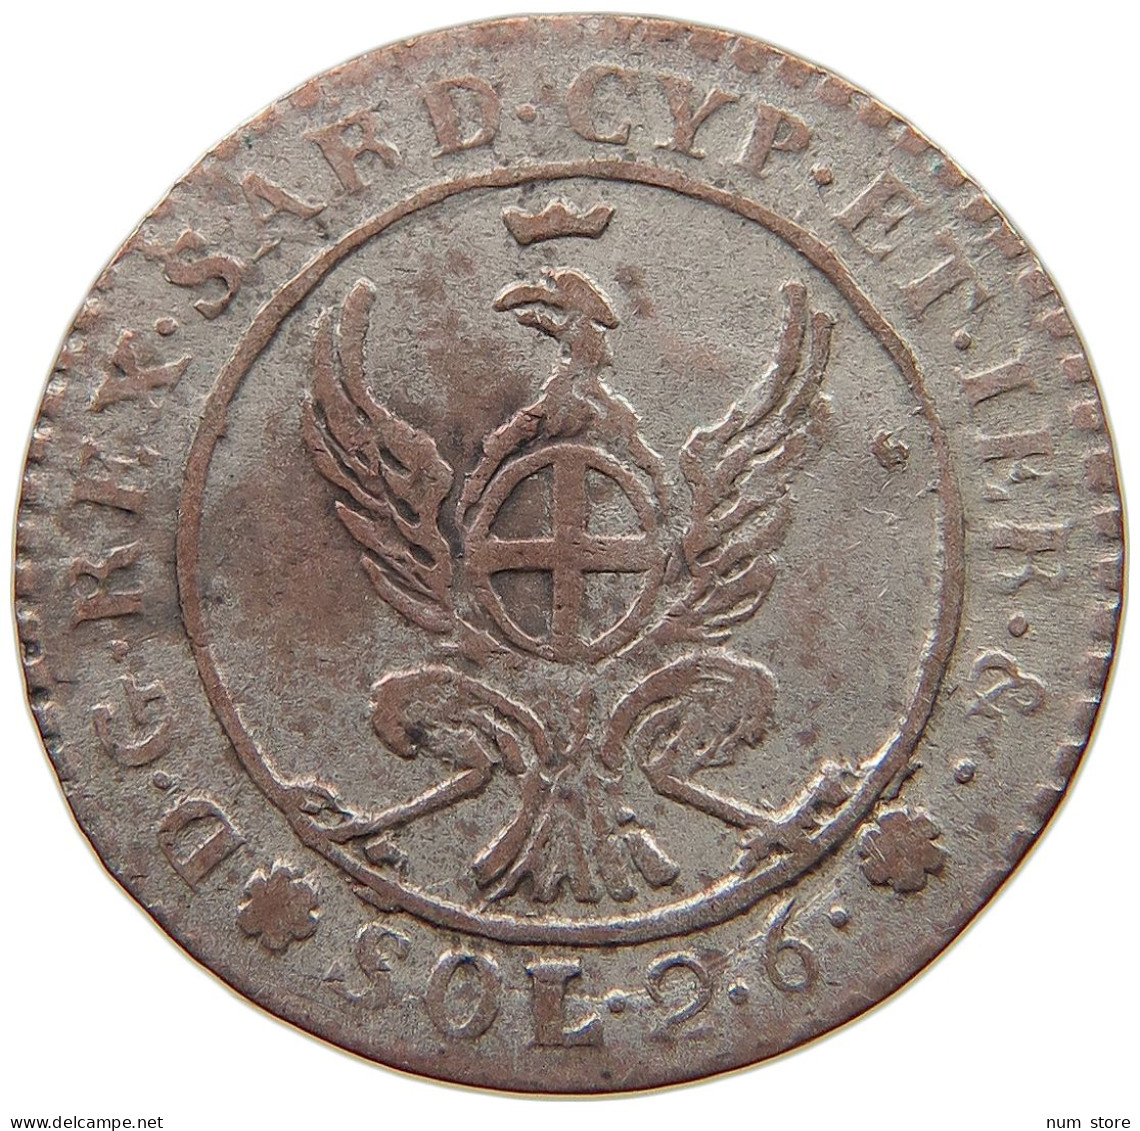 ITALY STATES SARDINIA 2.6 SOLDI 1815  #t107 0429 - Piémont-Sardaigne-Savoie Italienne